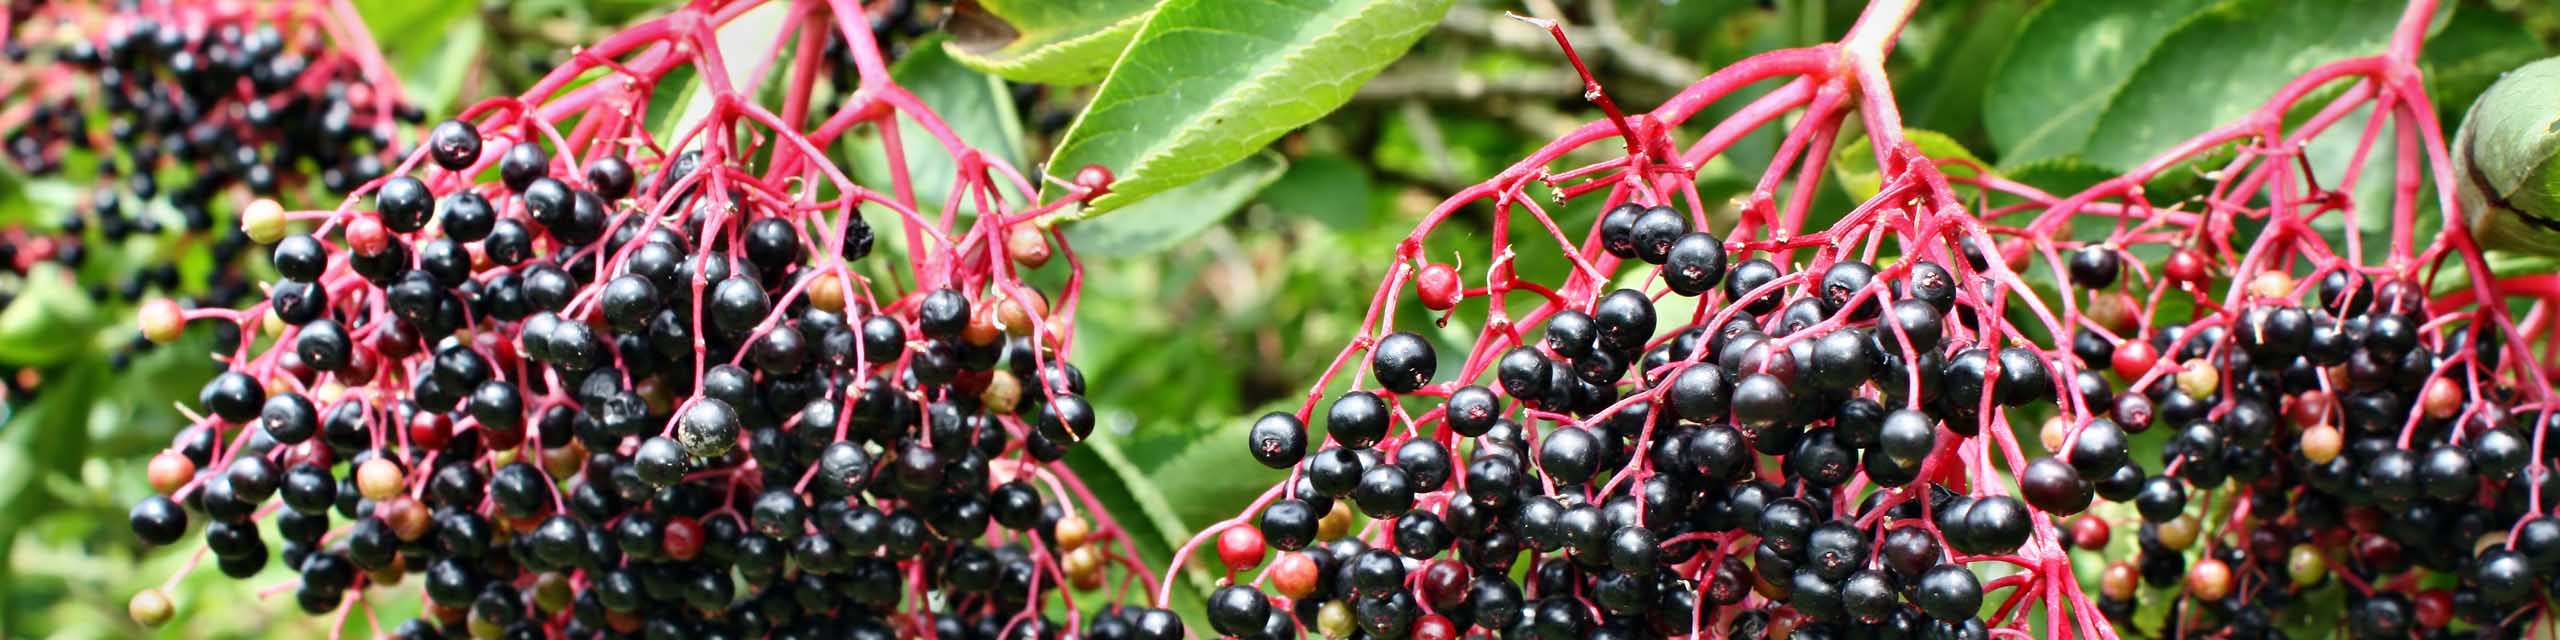 Clusters of black elderberries hanging from a branch.